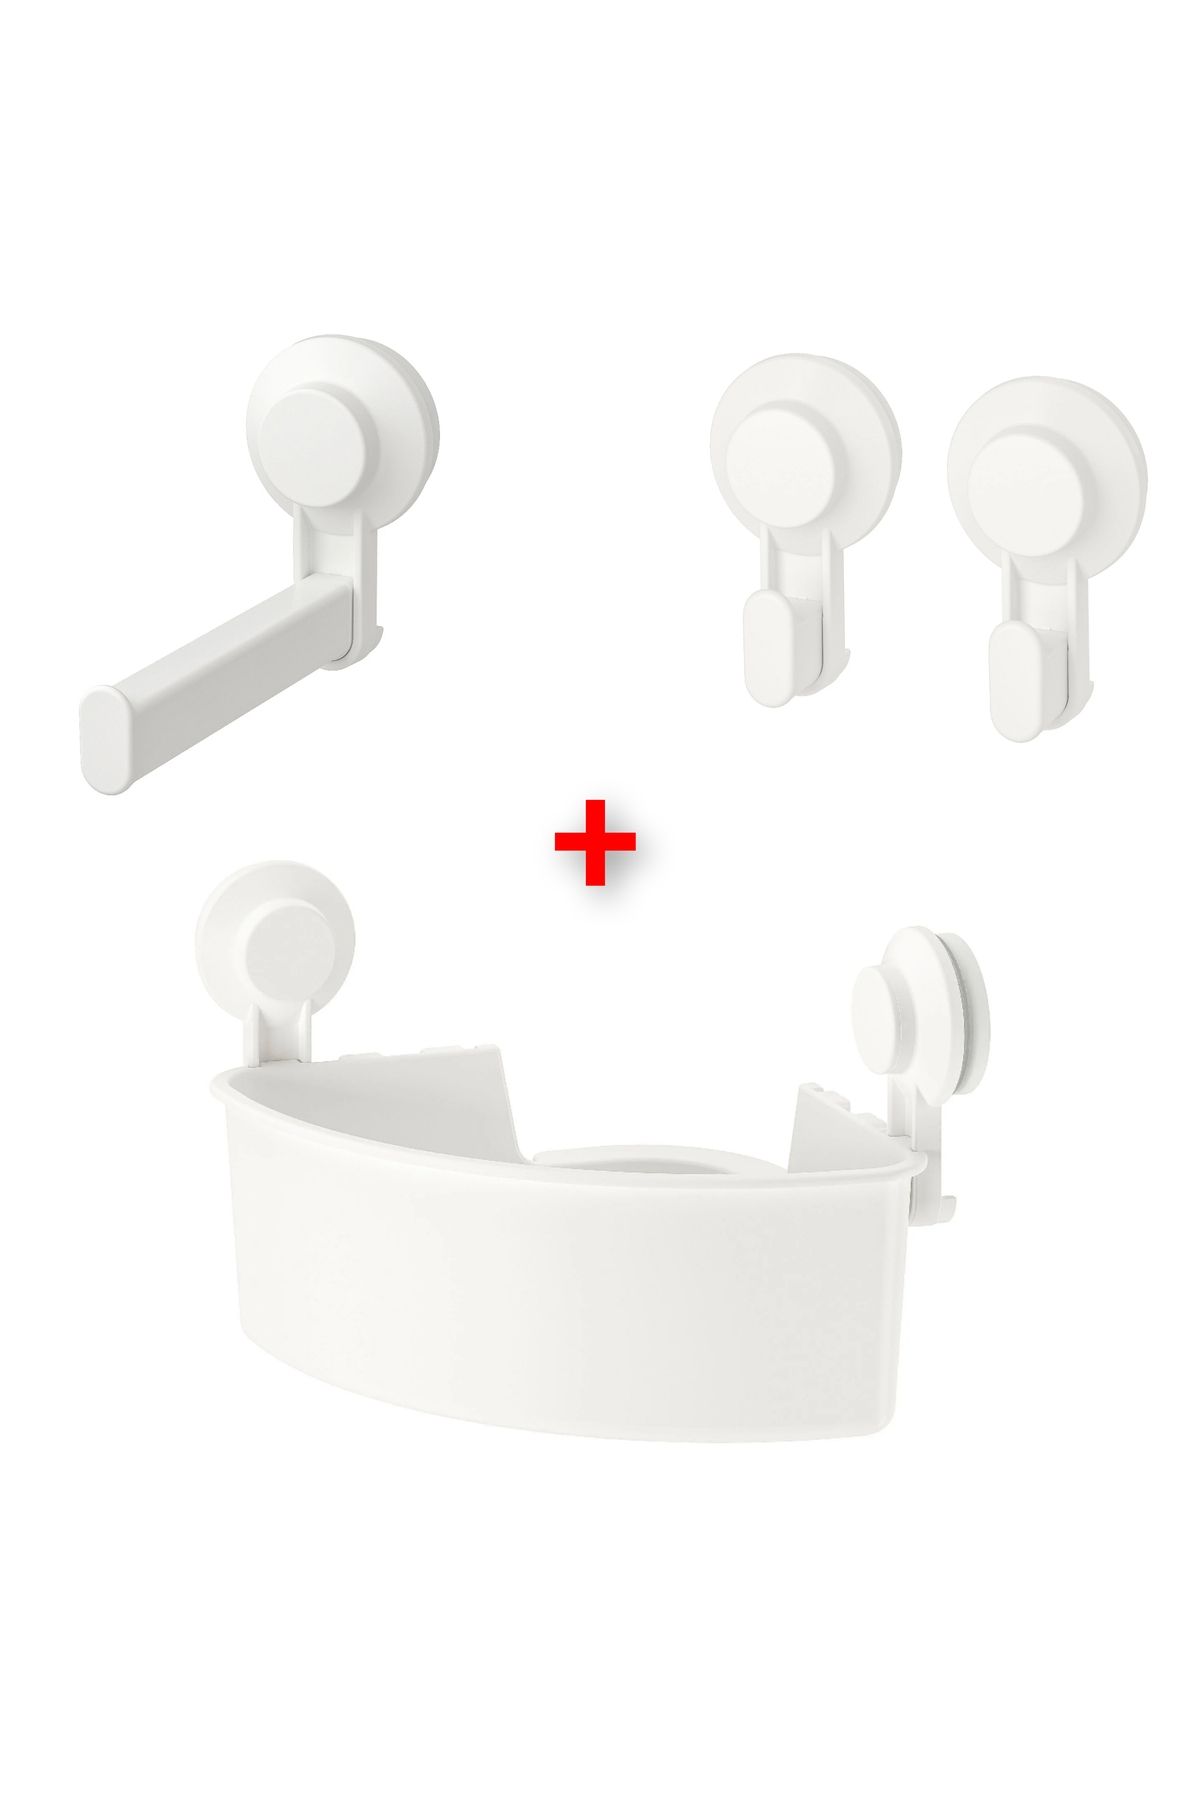 IKEA 3 Parça Vantuzlu Banyo Seti İkea Köşe Duş Sepeti, Tuvalet Kağıtlığı ve 2 Li Duvar Askısı Plastik